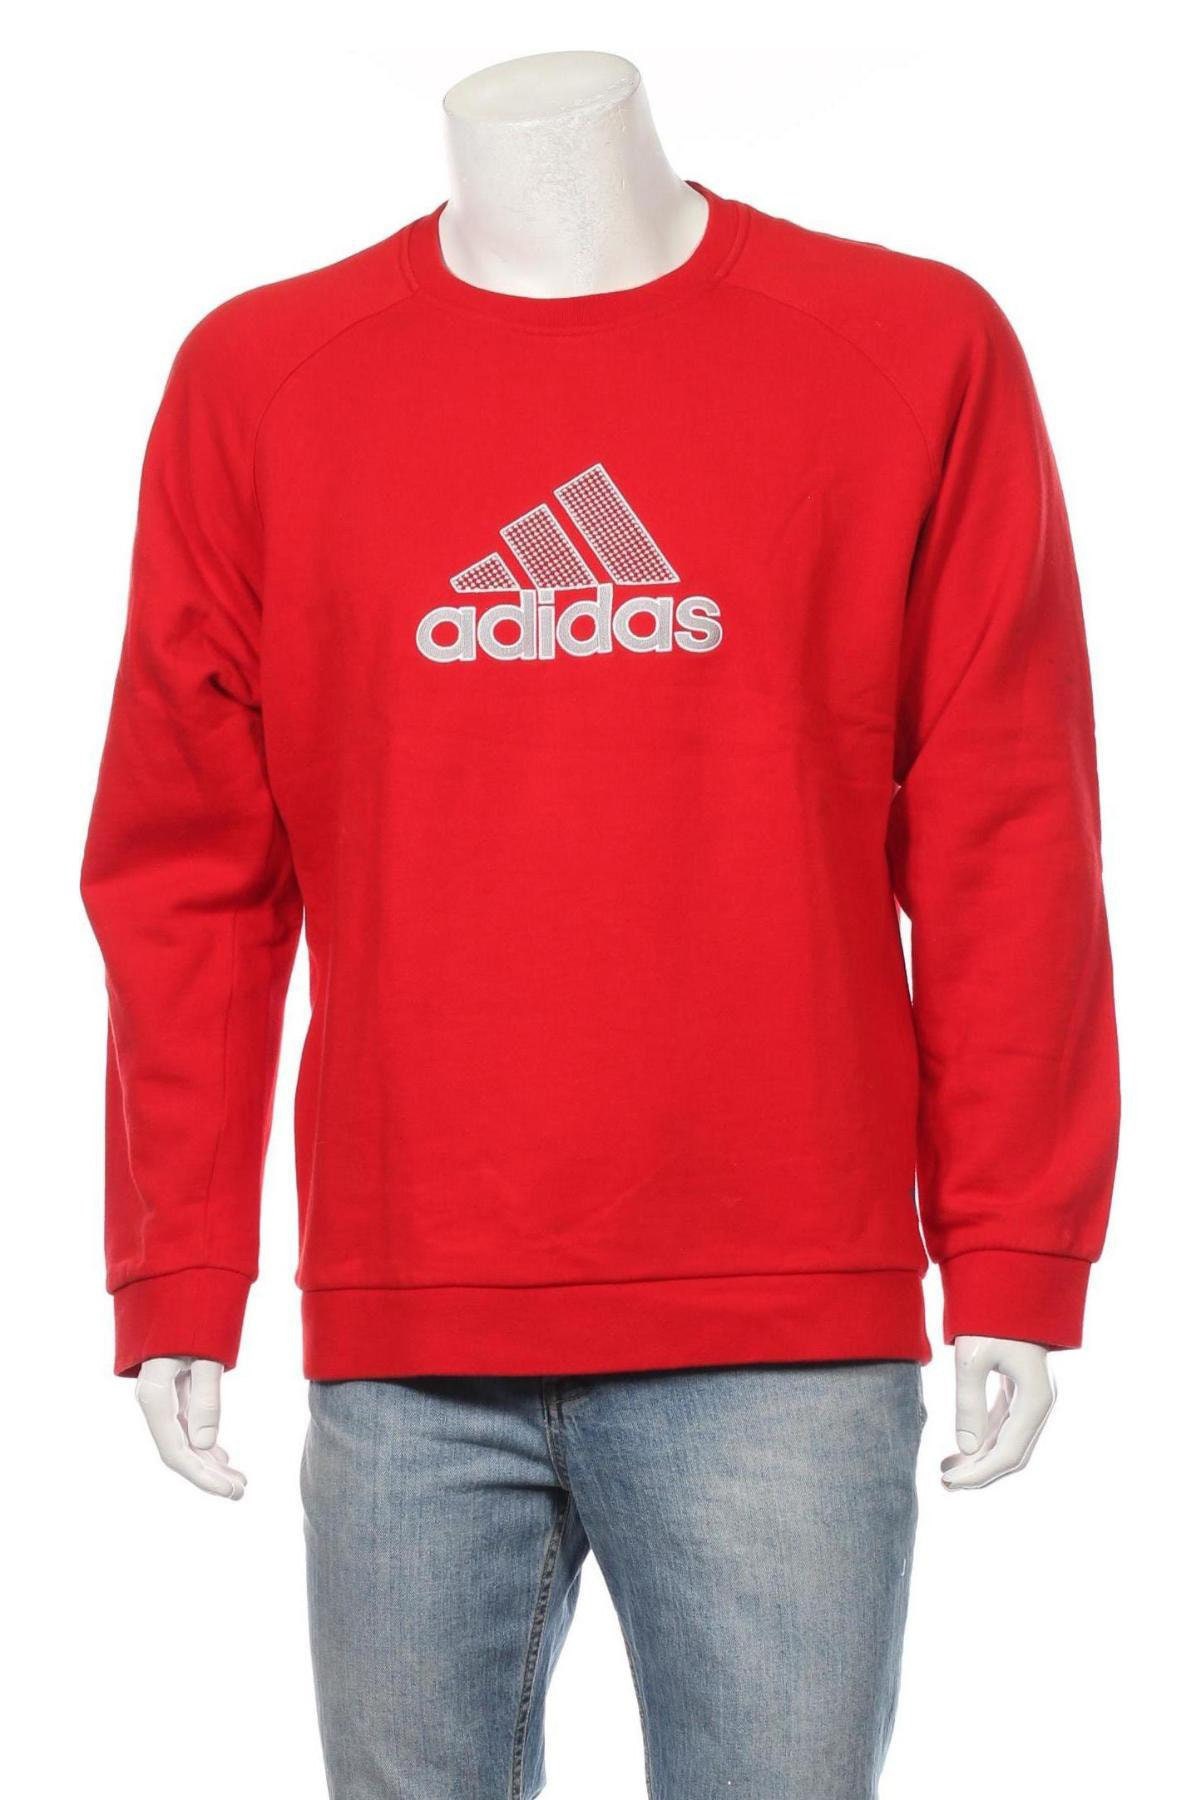 Vintage Adidas Men's sweatshirt Big logo Spell Out Red | Etsy